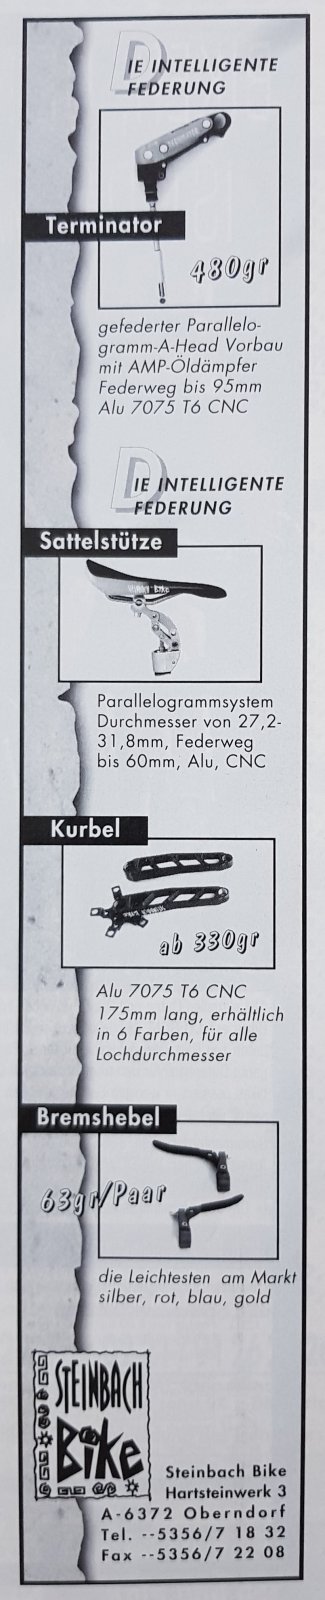 Steinbach Ad aus Bike 1995.jpg